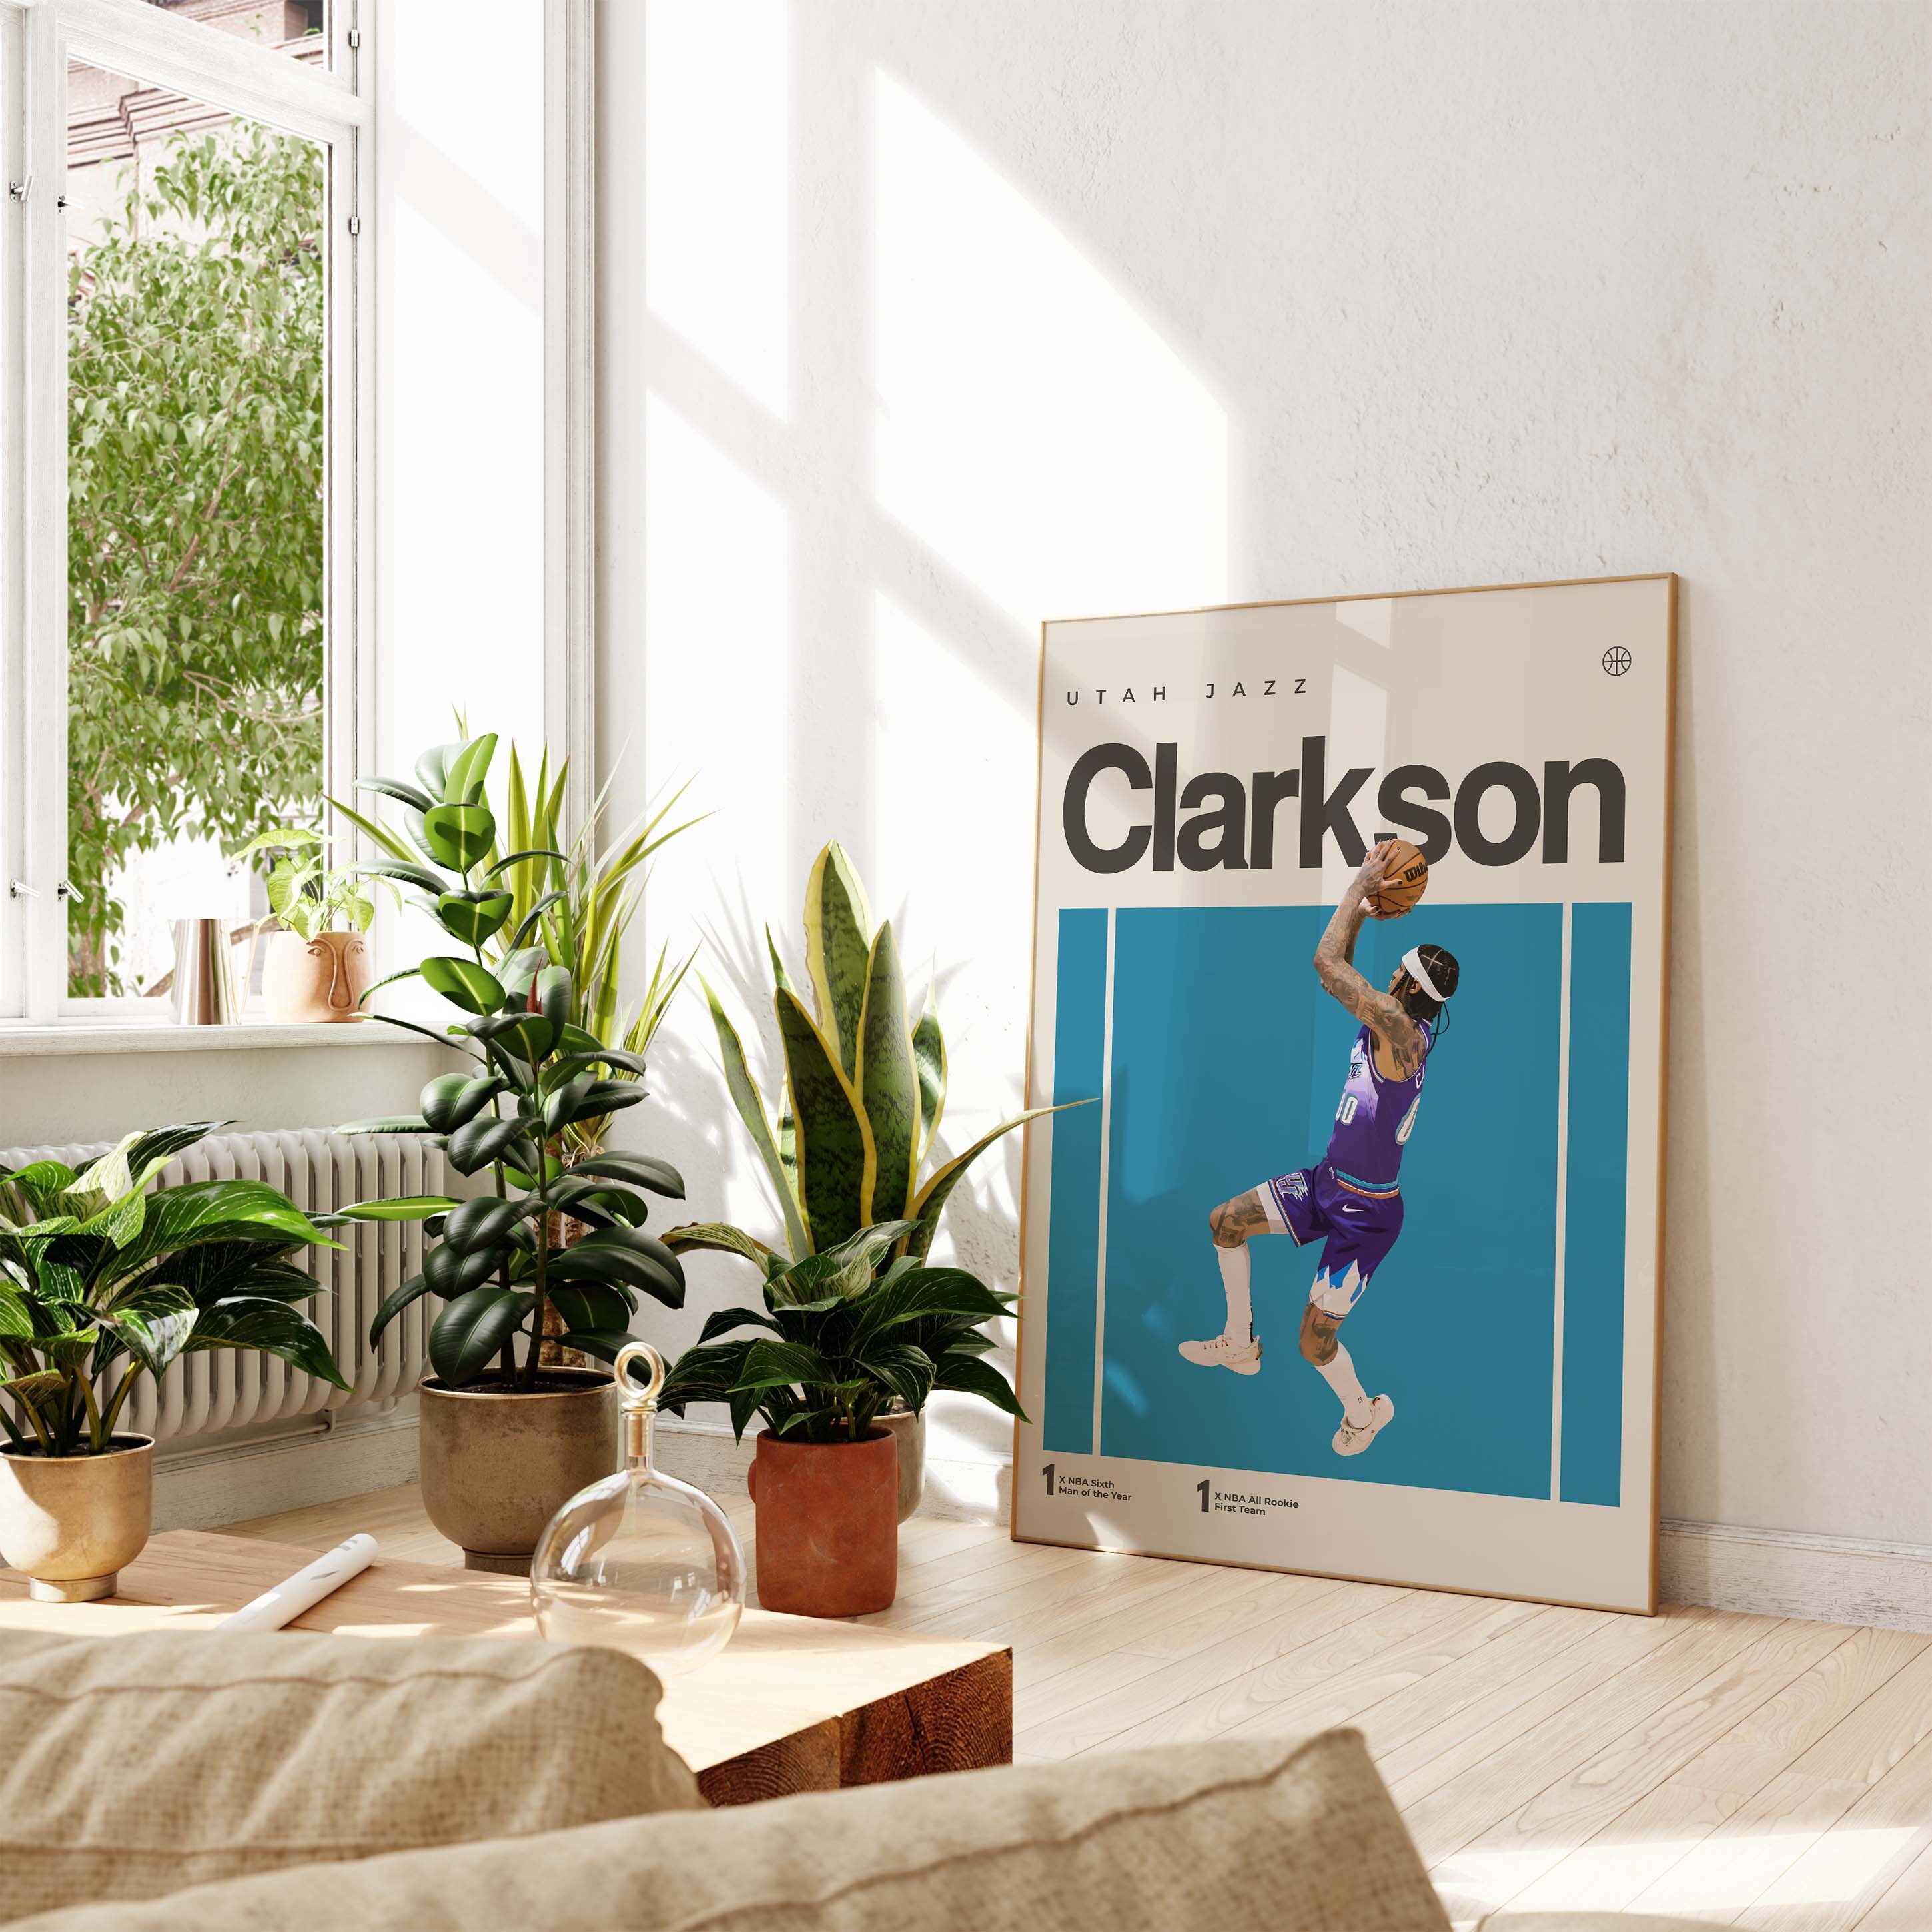 Clarkson  Nba pictures, Utah jazz, Sport poster design